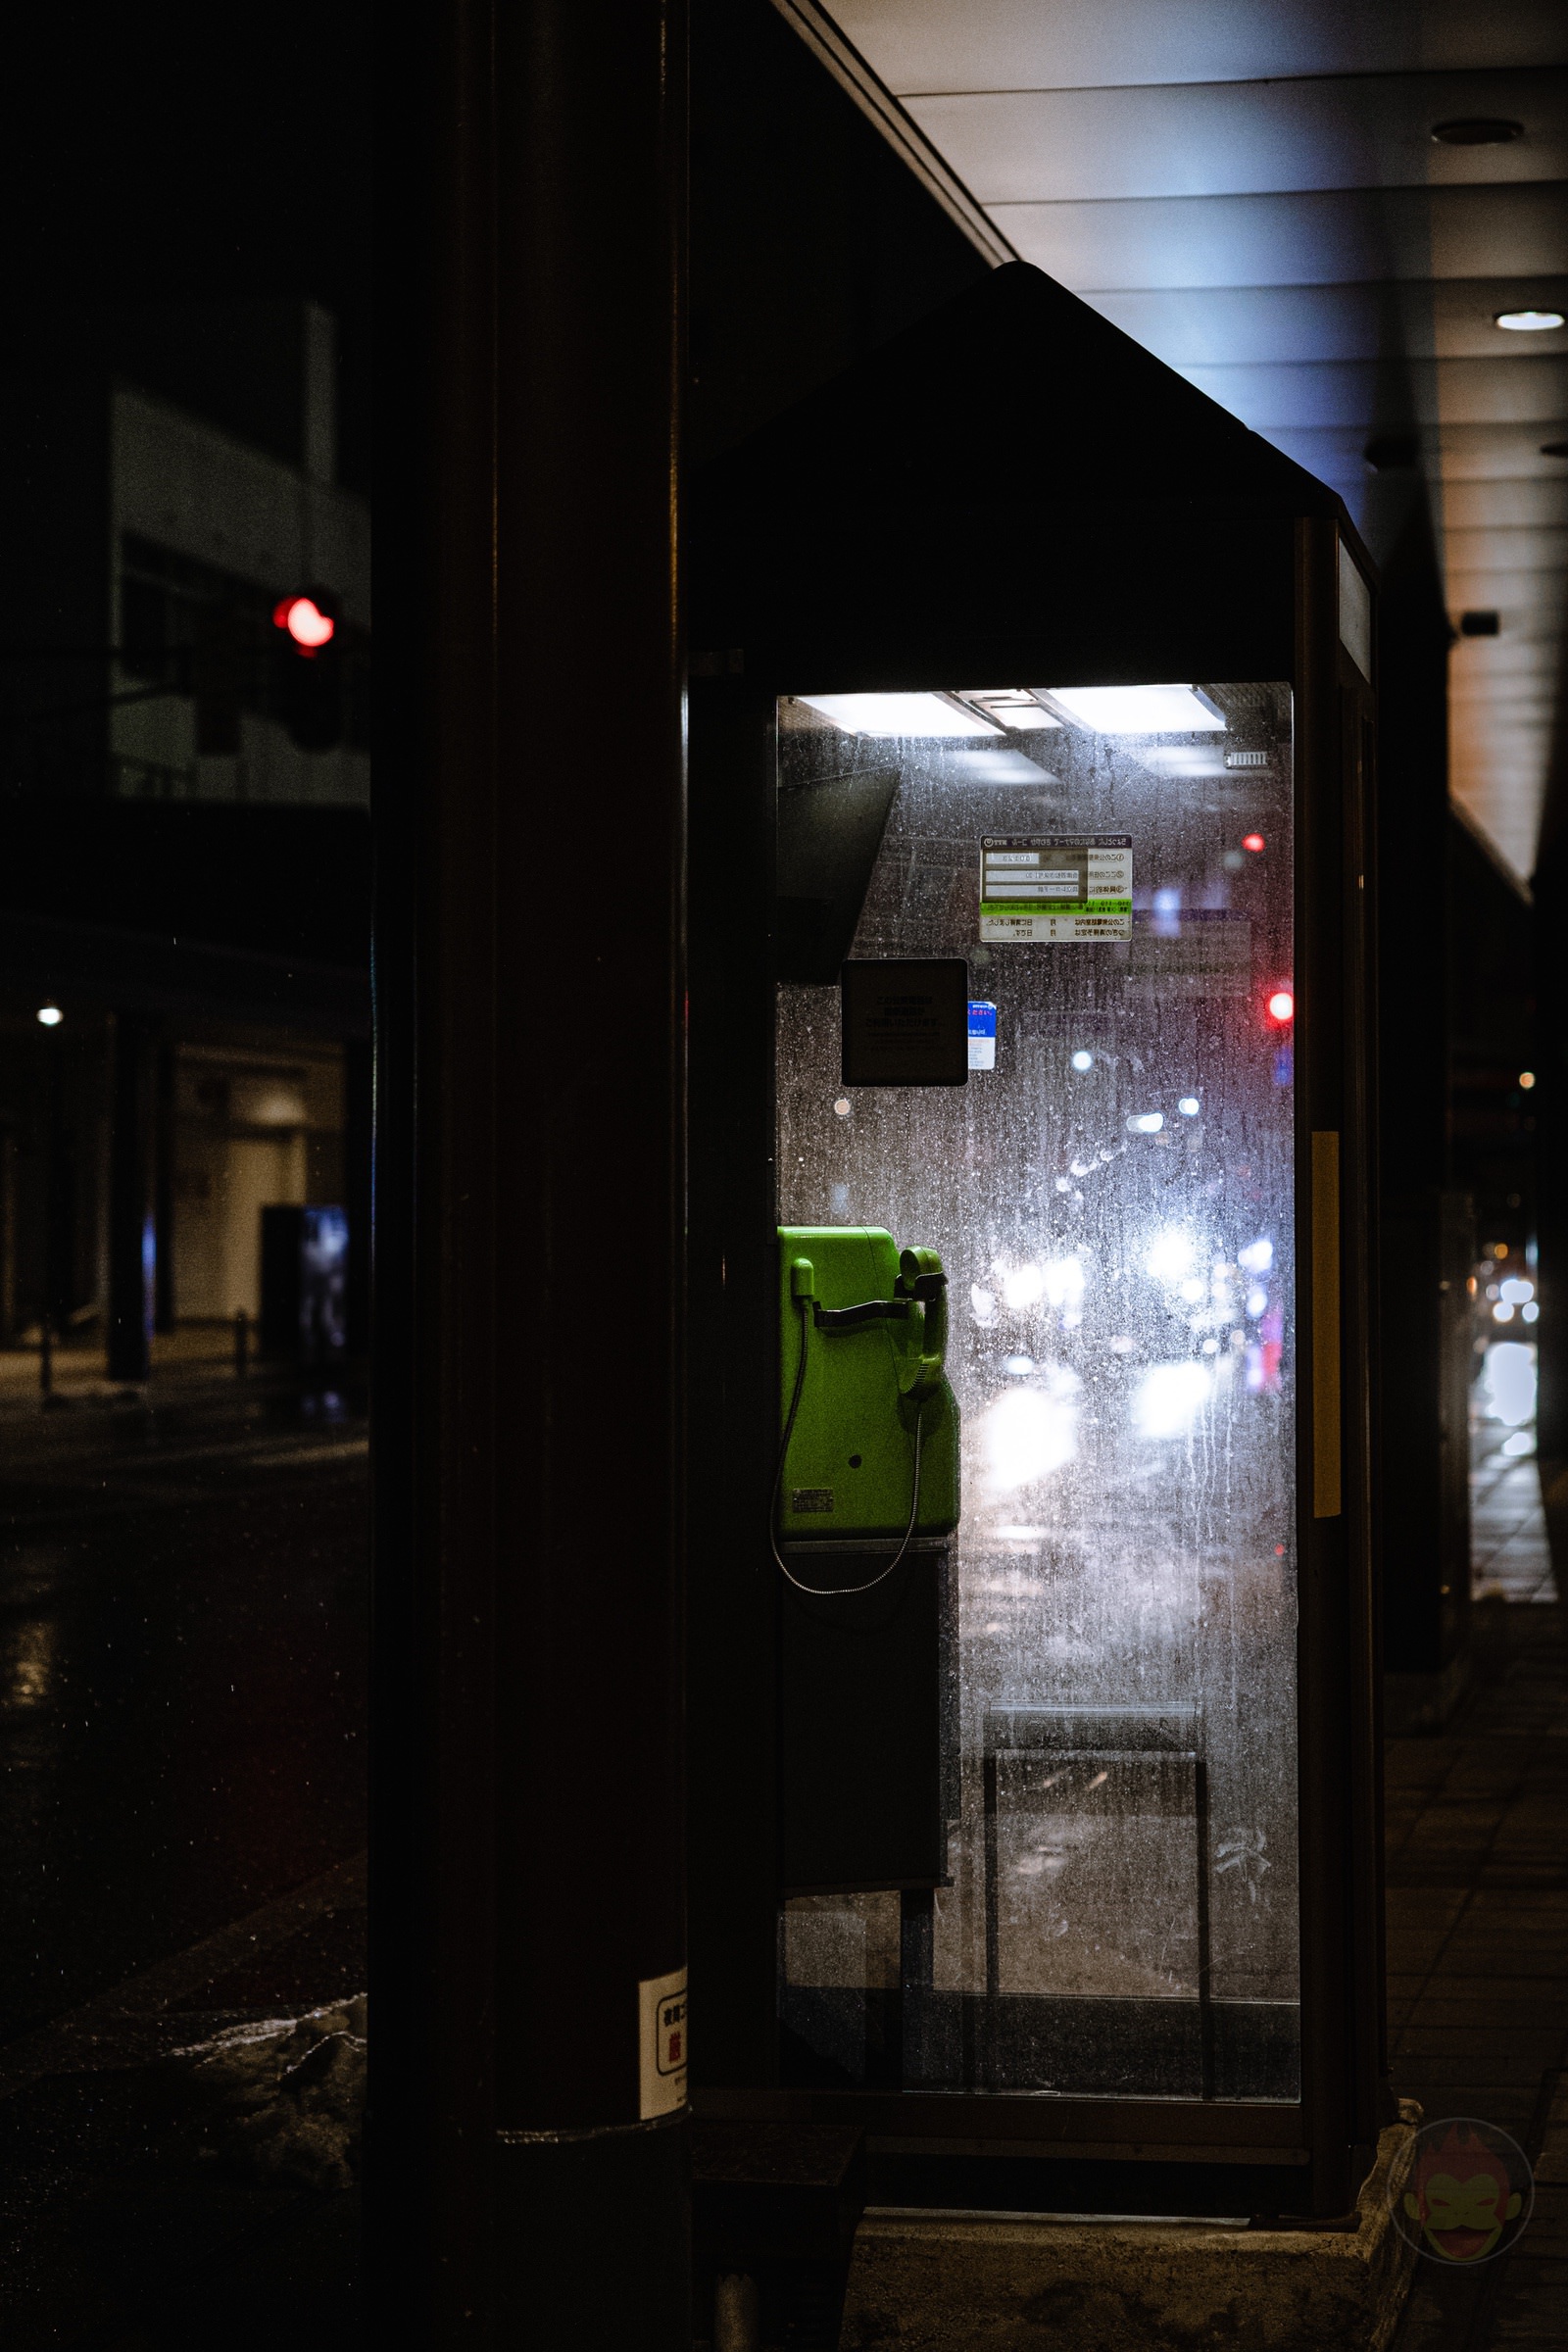 Aizu Wakamatsu night in the rain street photography 02